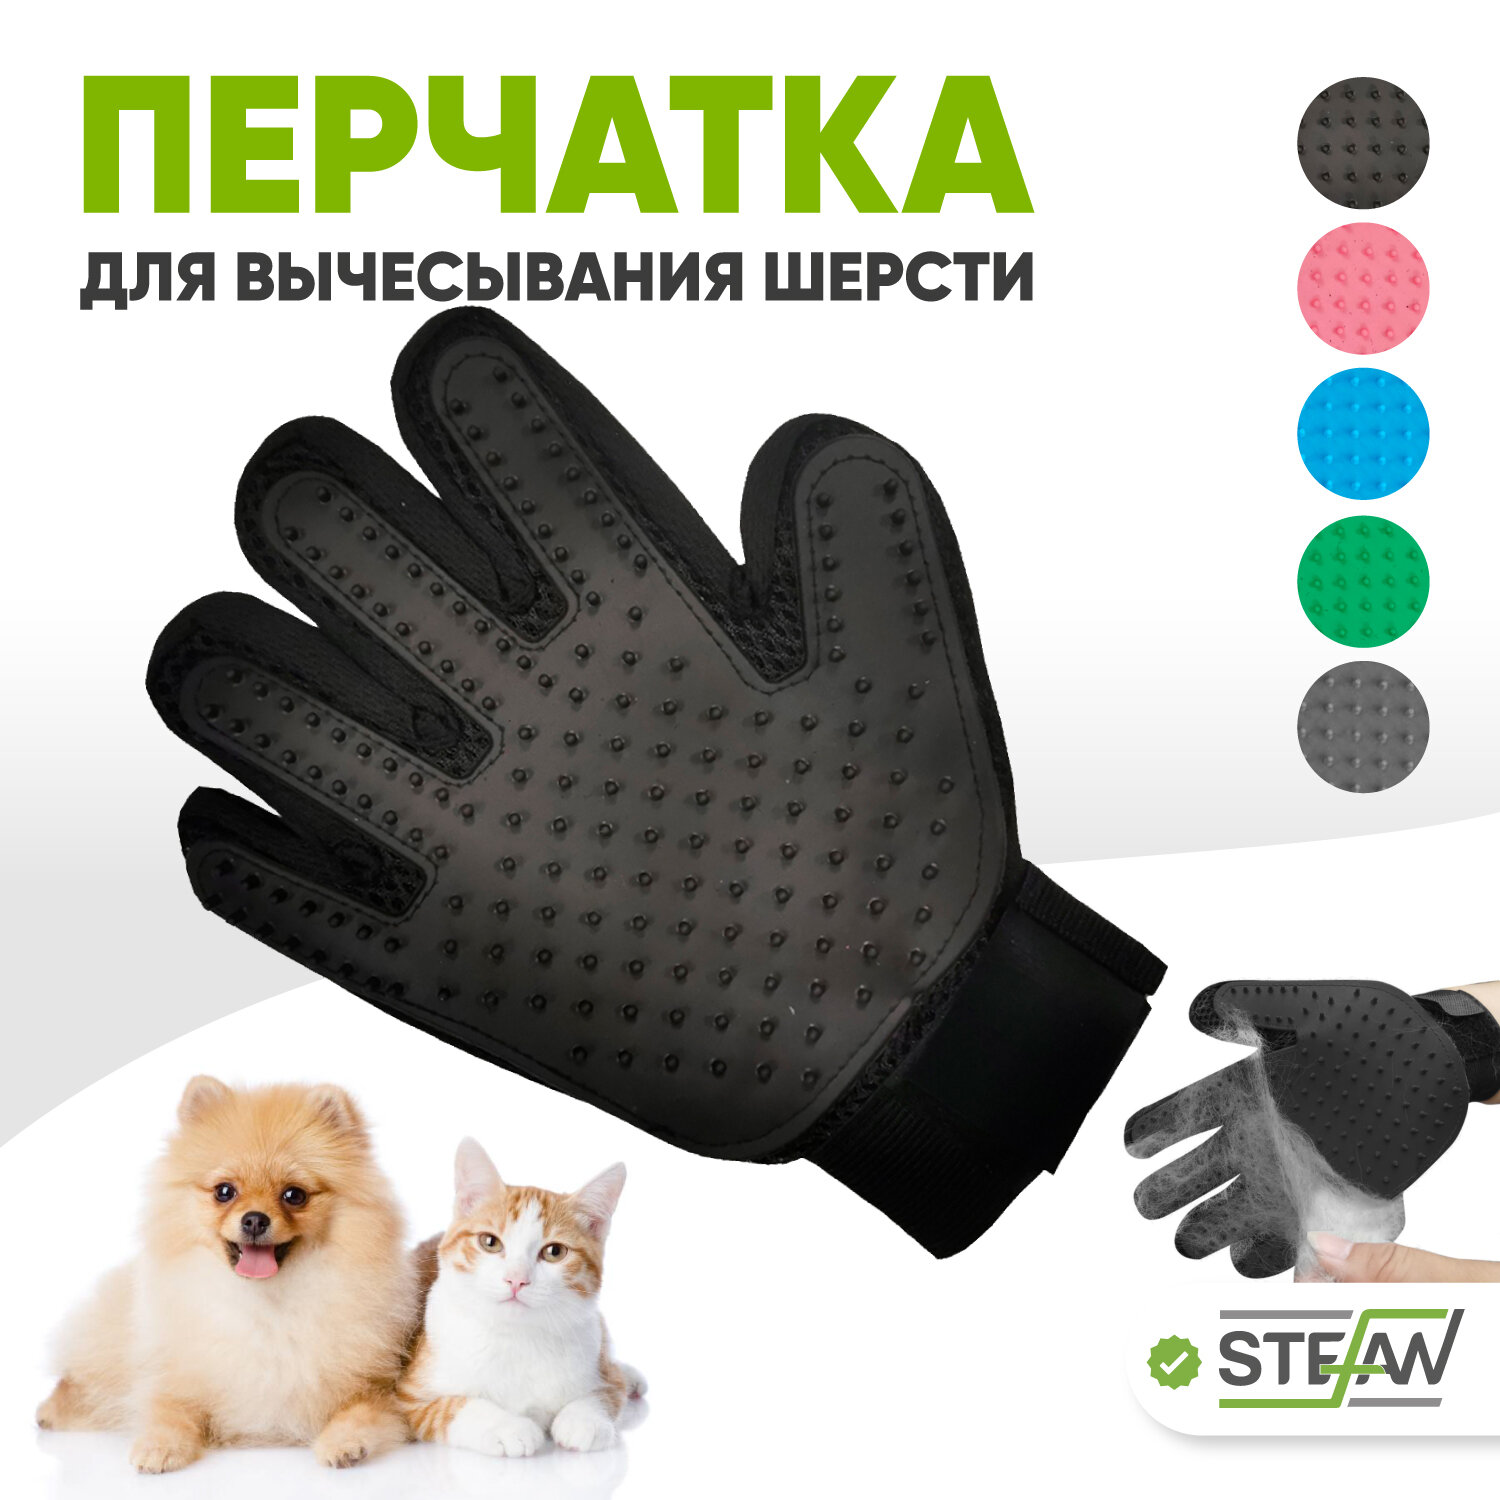 Перчатка массажная для вычесывания шерсти животных STEFAN (Штефан), черный, 23х17см, PMG-1201BLCK